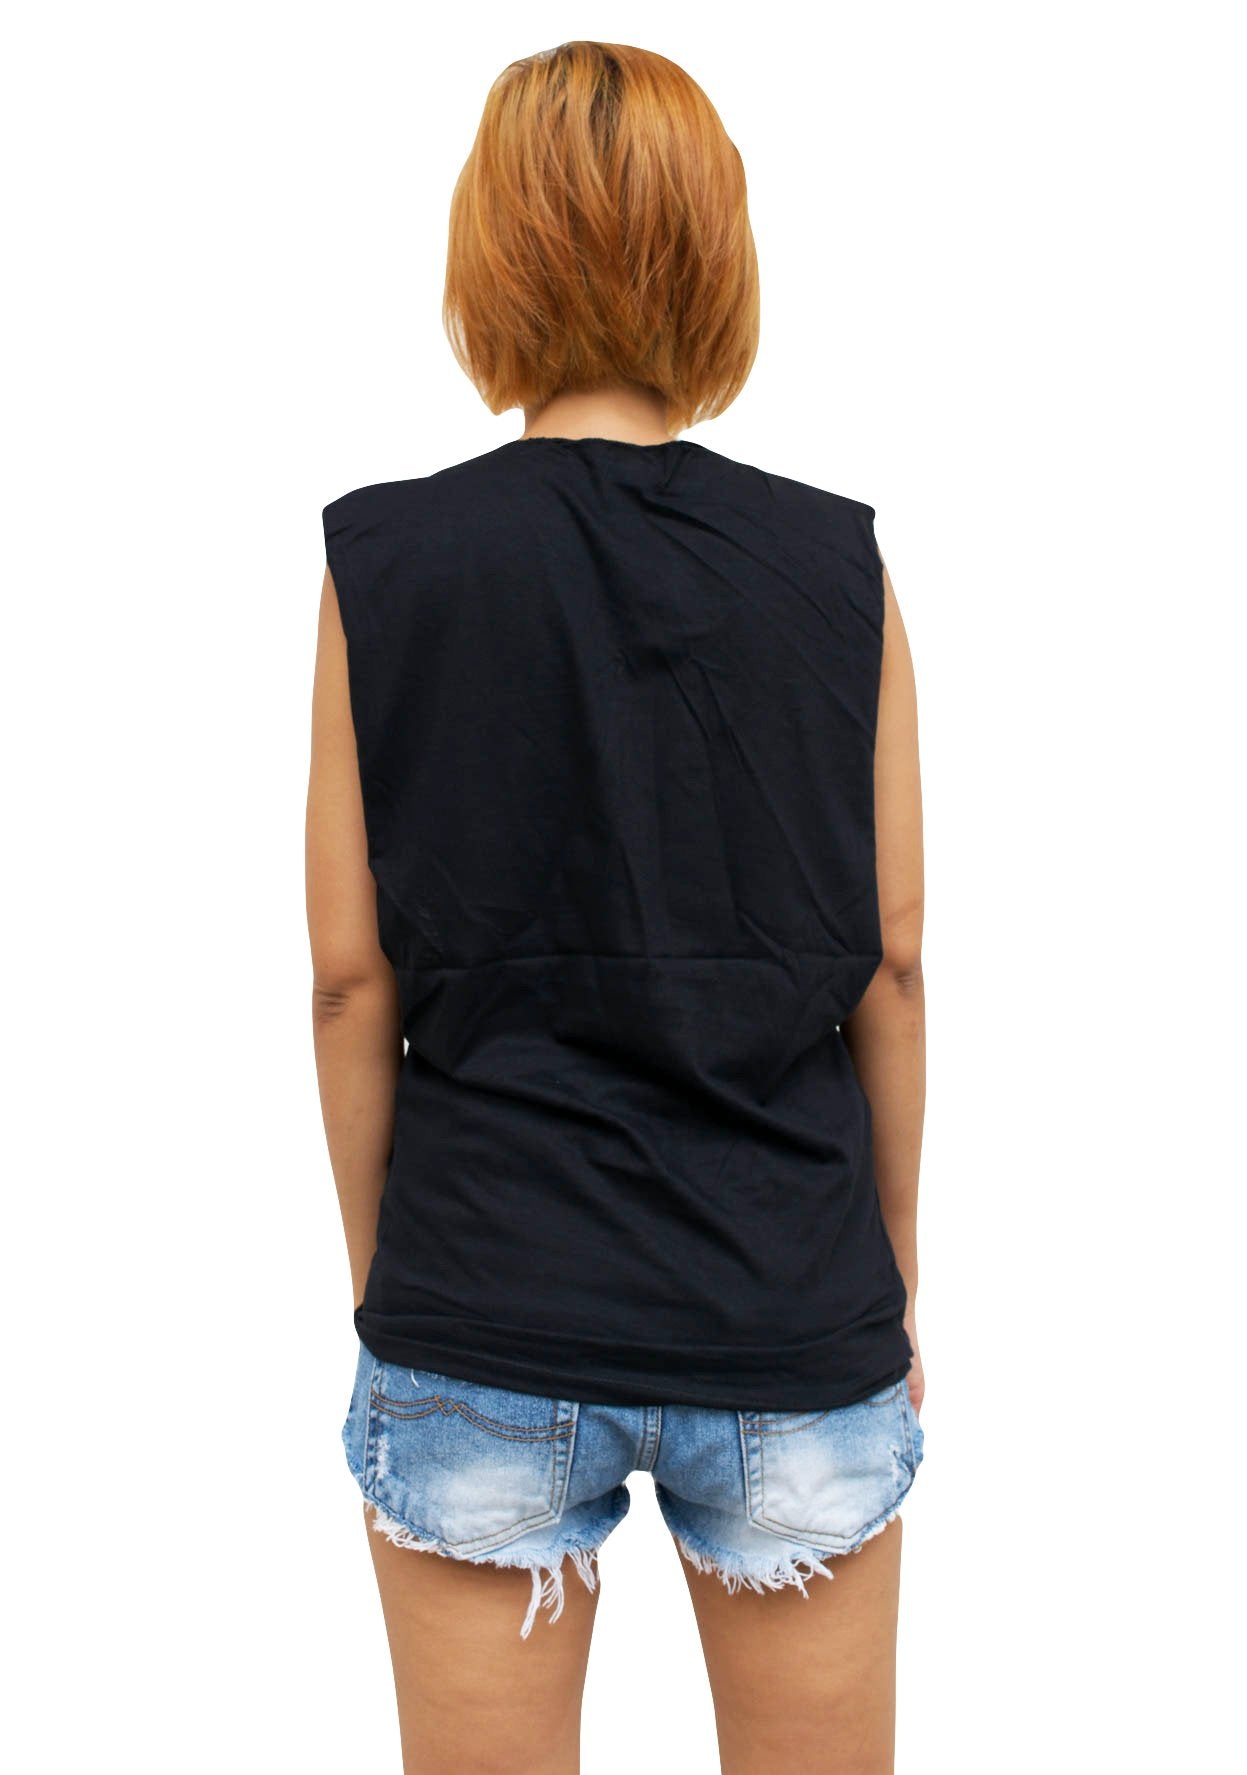 Ladies David Bowie Vest Tank-Top Singlet Sleeveless T-Shirt